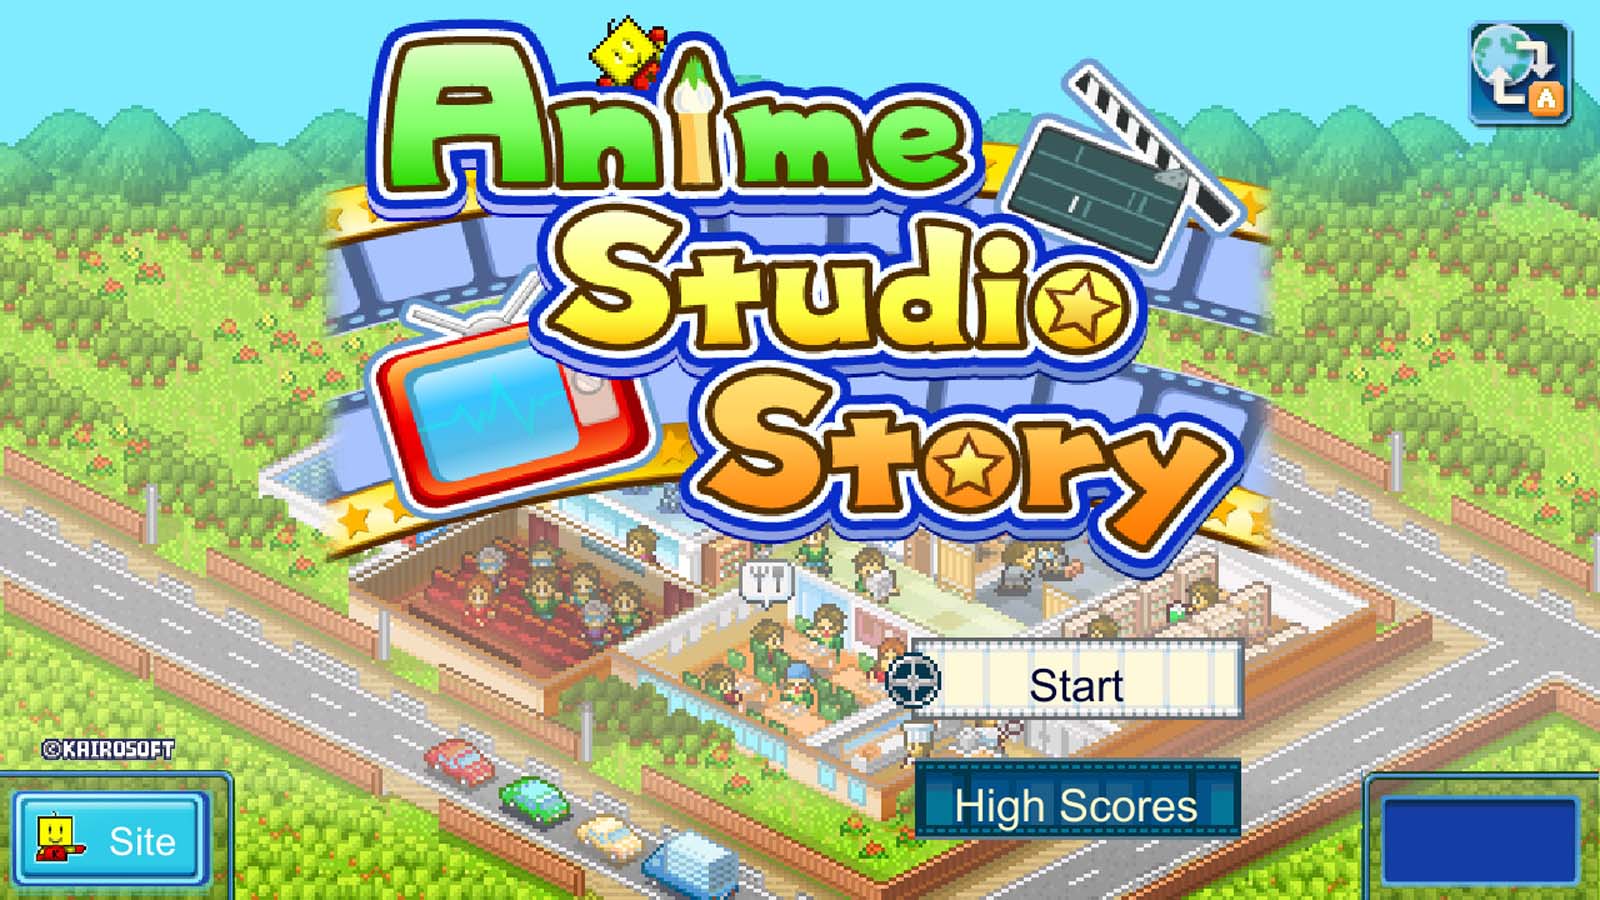 Anime Studio Story APK (Android Game) - Unduh Gratis